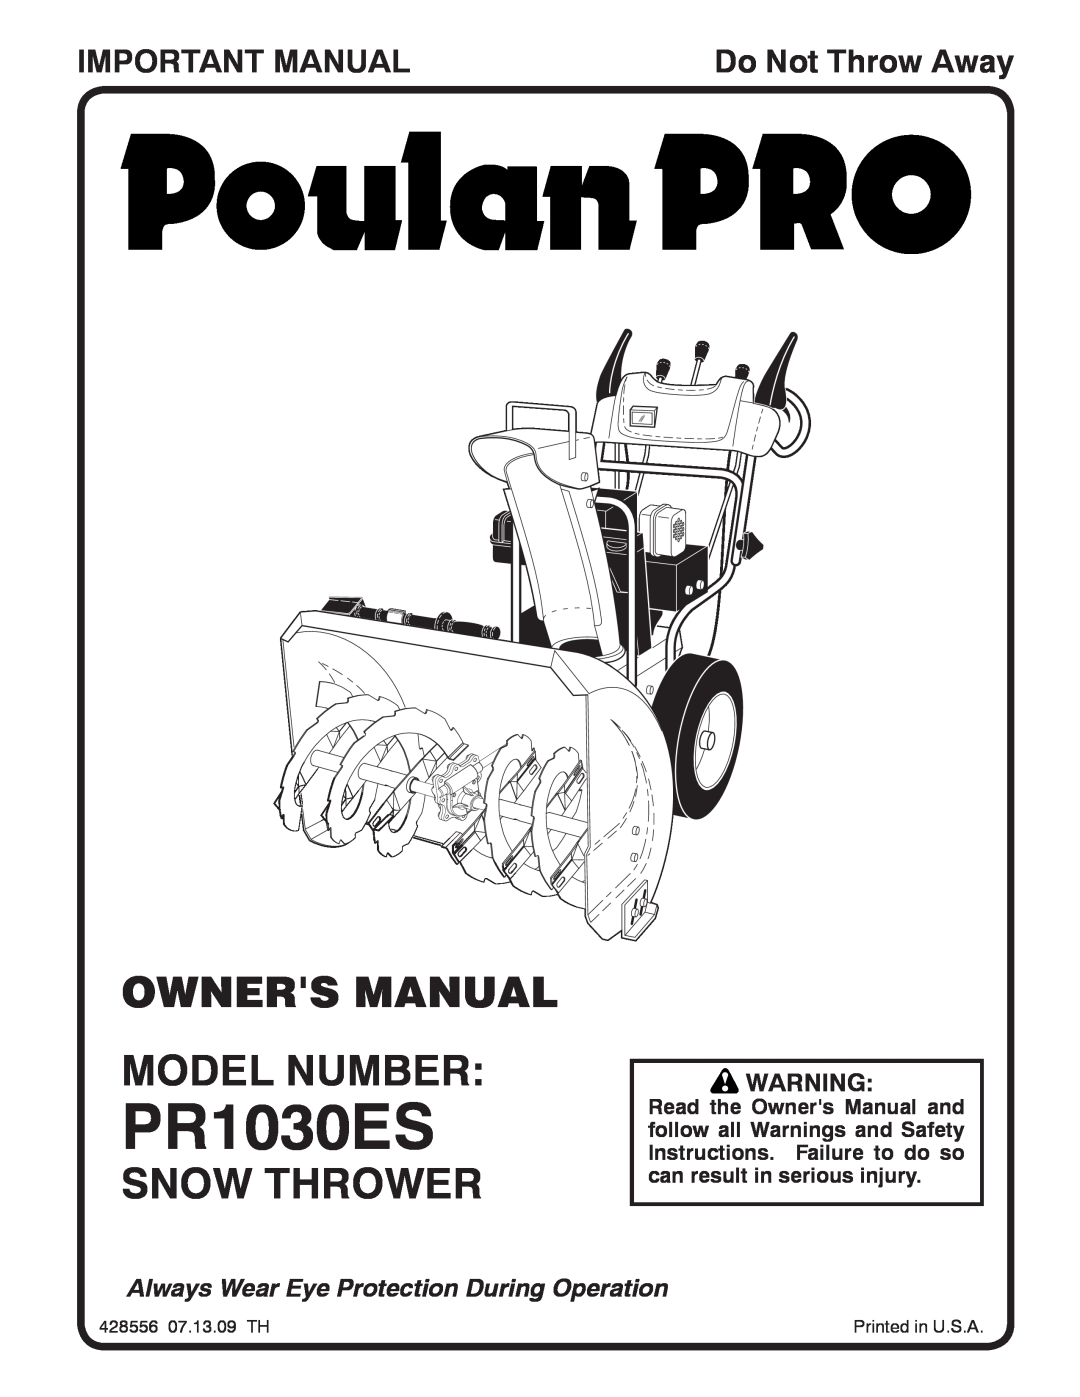 Poulan PR1030ES, 96192003100 owner manual Snow Thrower, Important Manual, Do Not Throw Away 